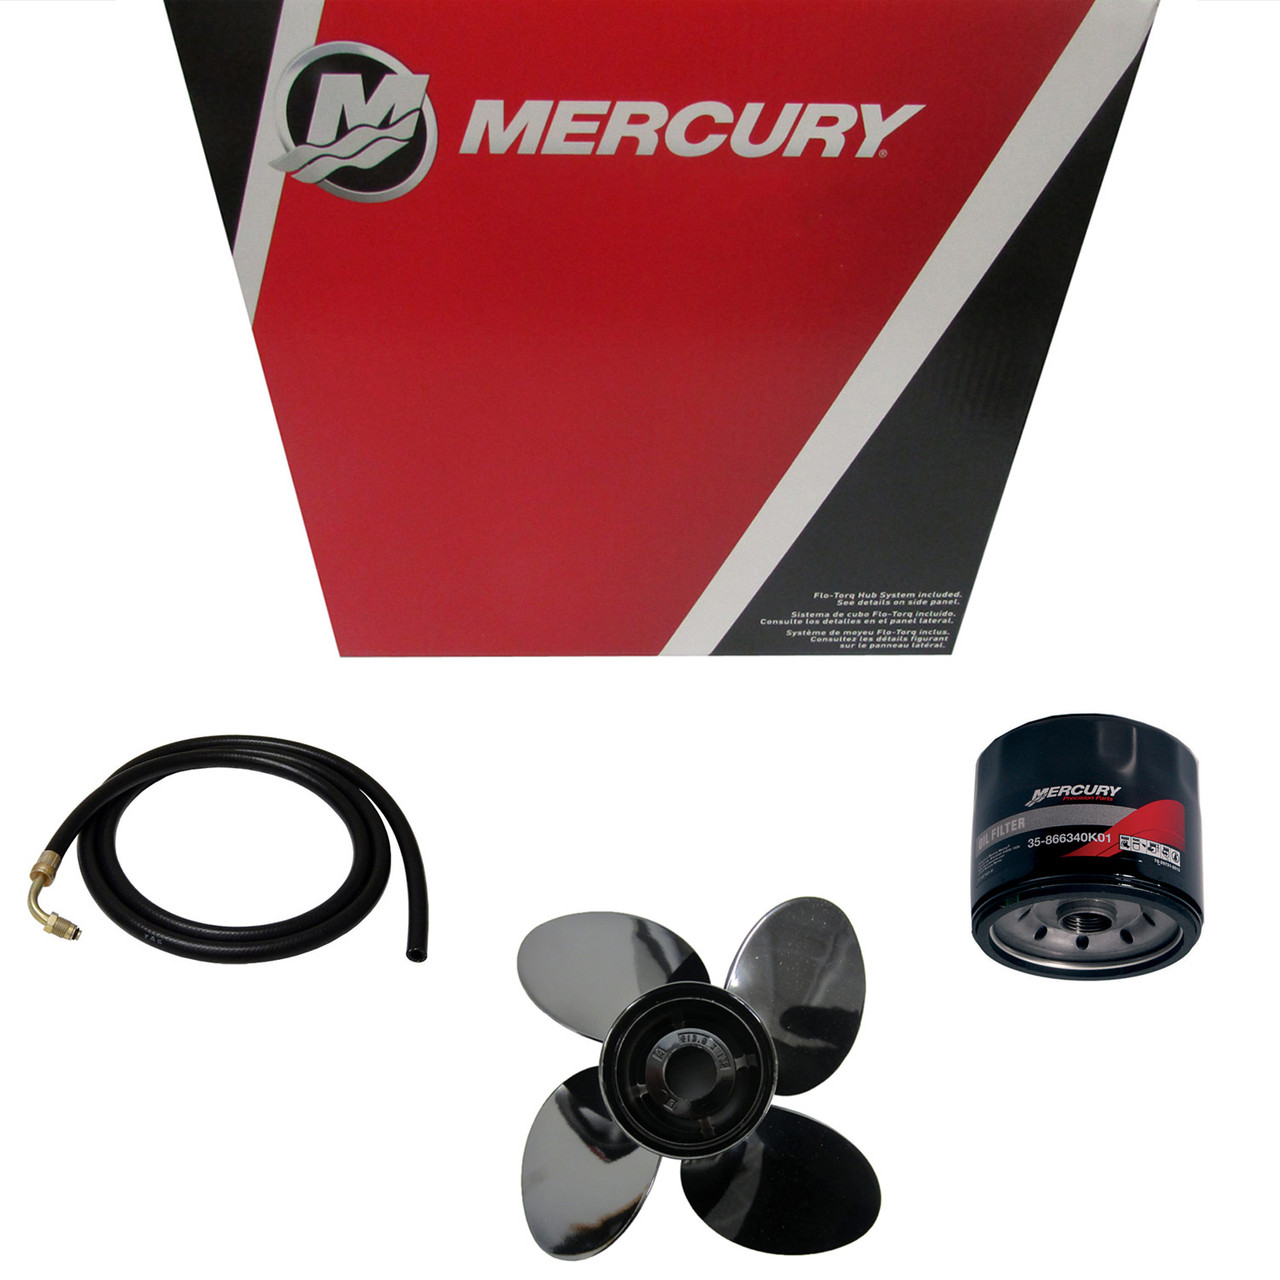 Mercury Marine / Mercruiser New OEM Cable Kit, 821945A57